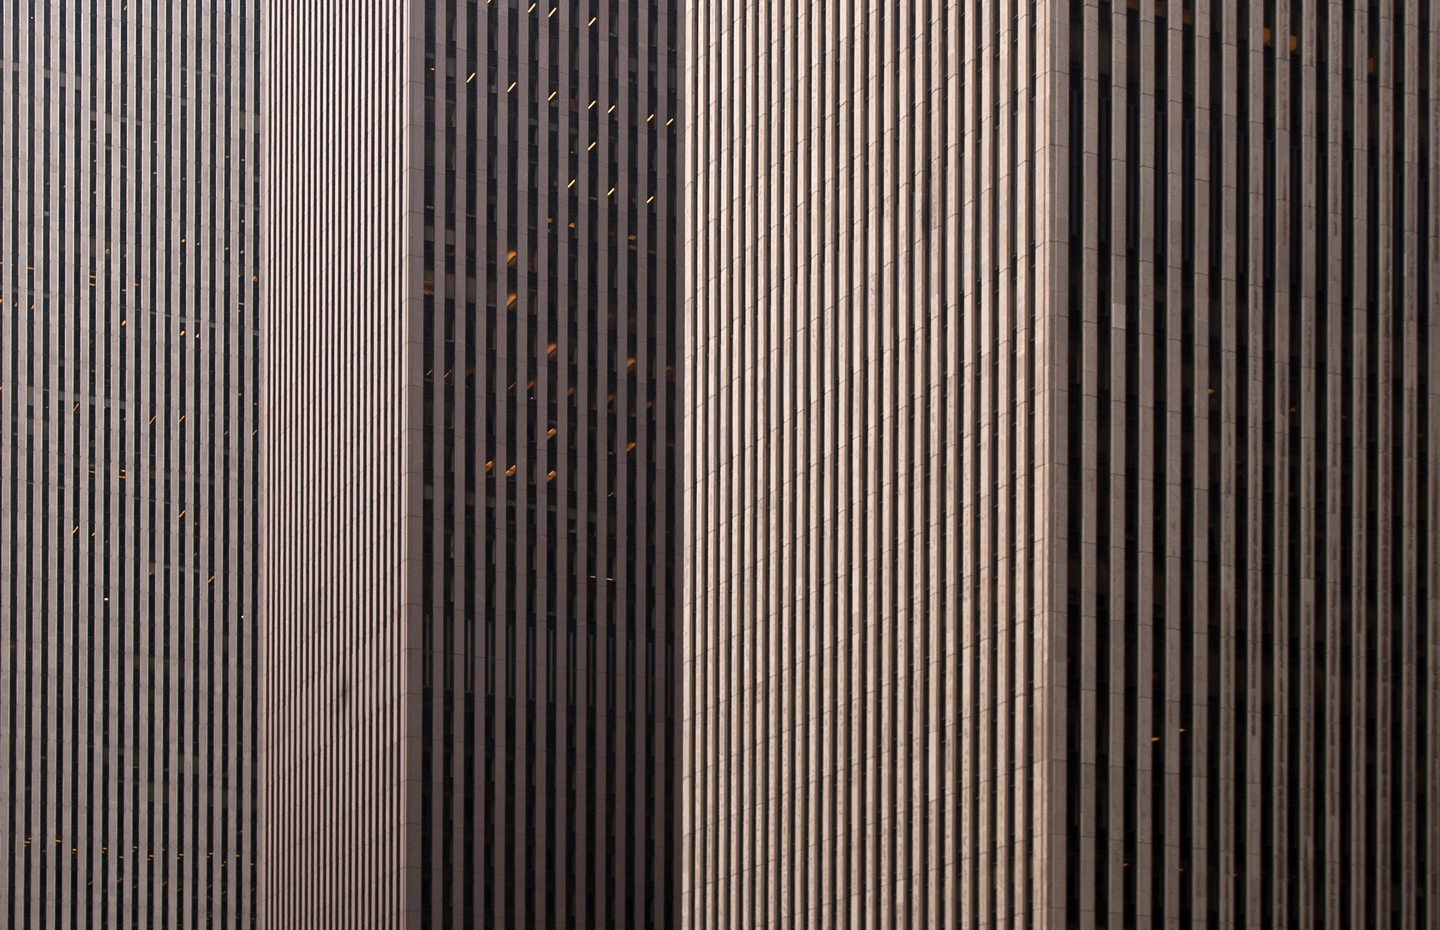 Skyscrapers facades in Manhattan